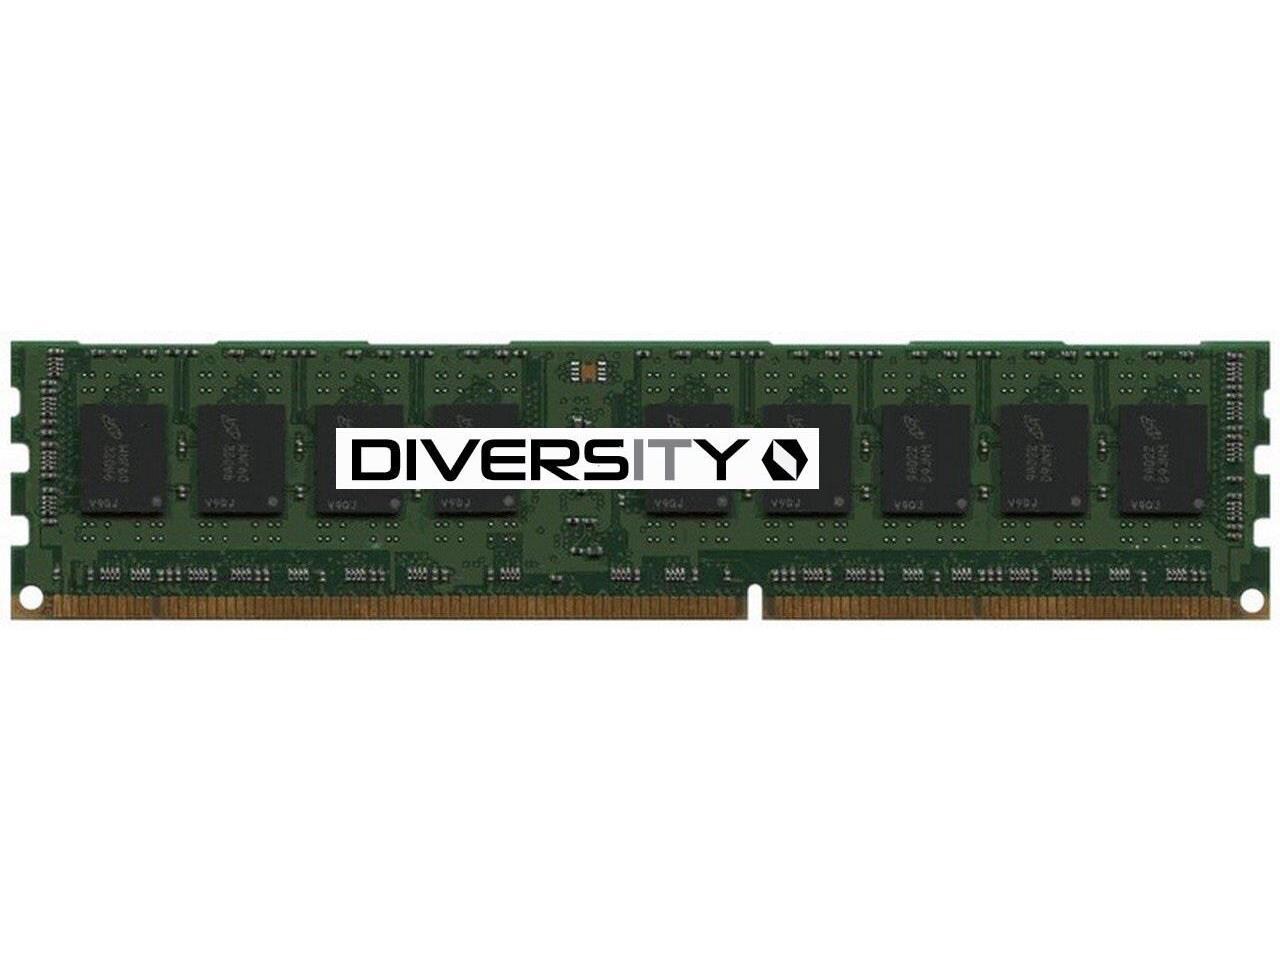 Cisco - DDR4 - 16 GB - DIMM 288-pin - registered